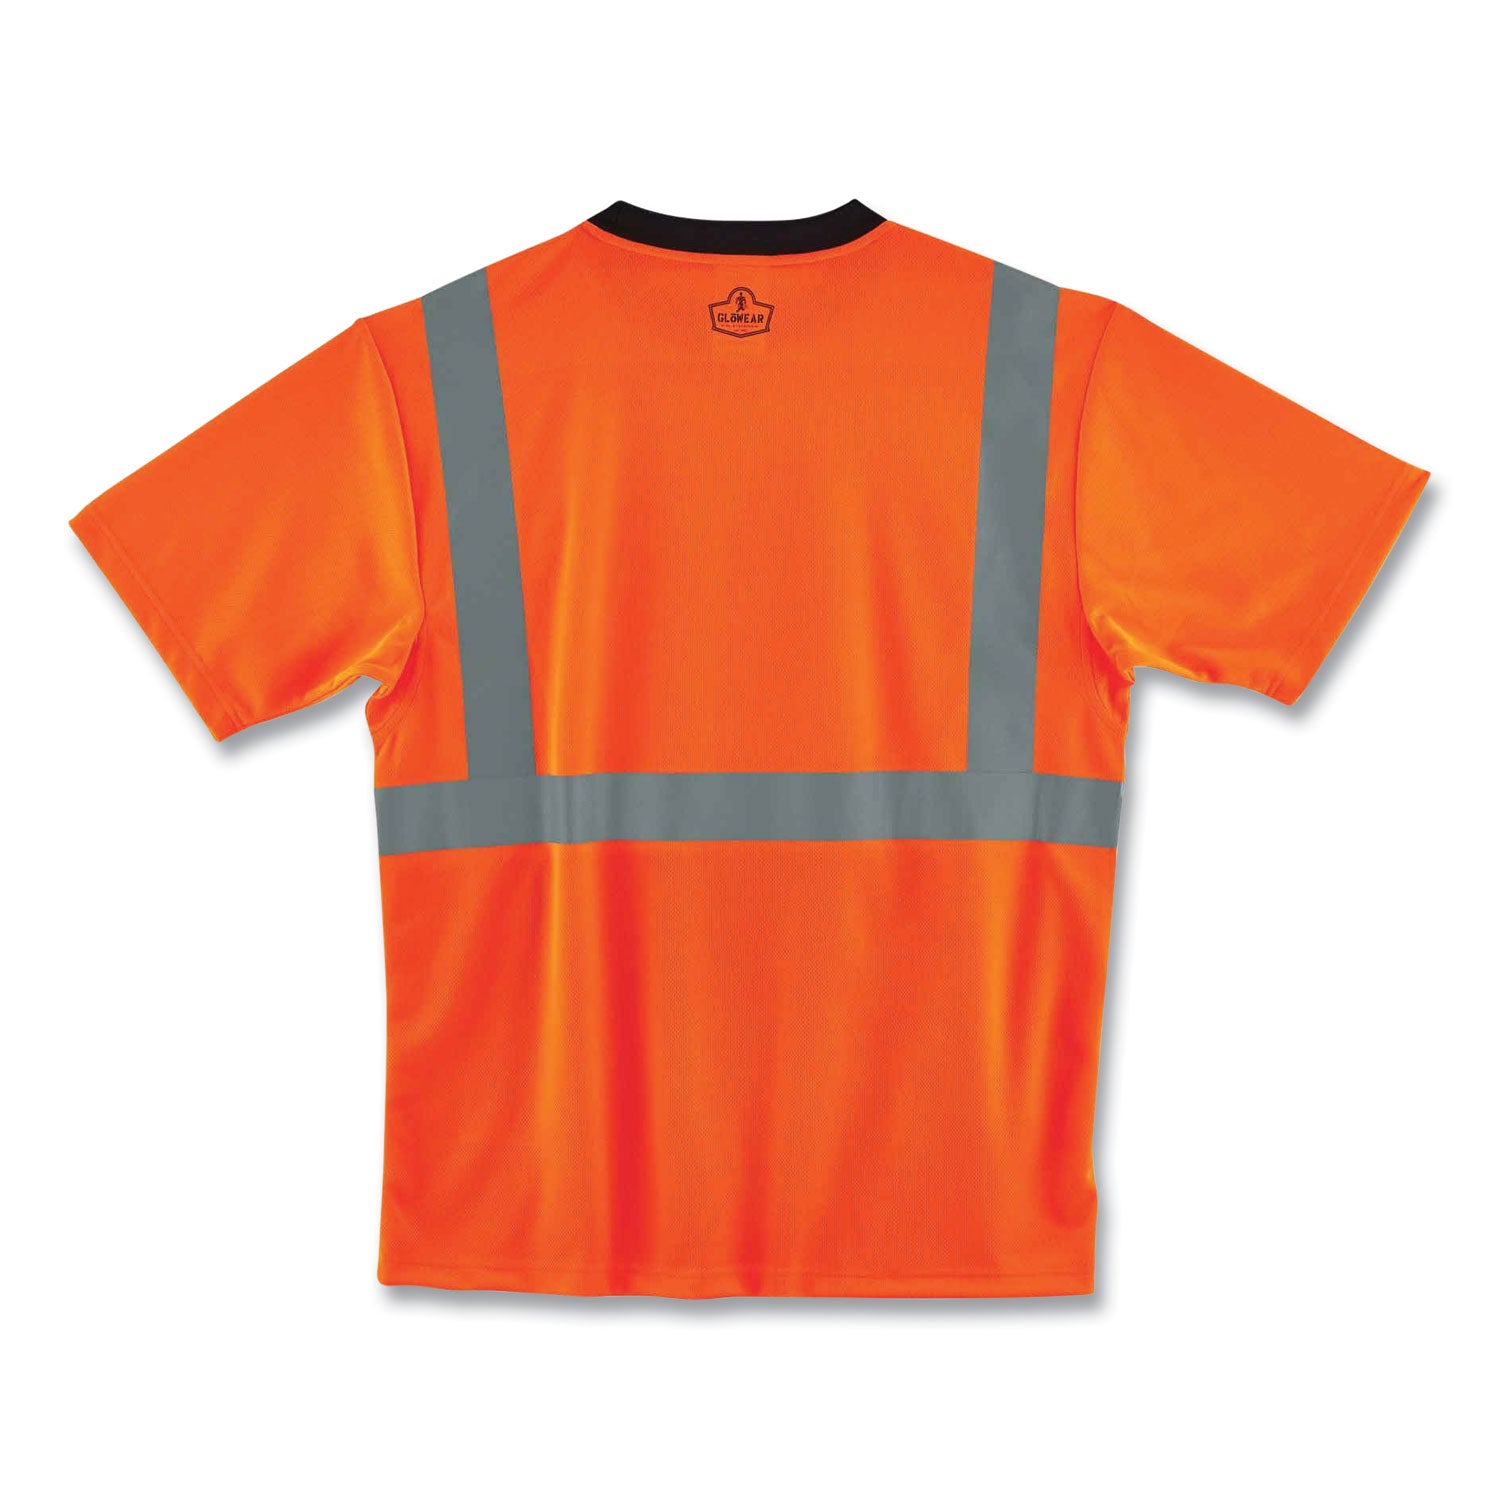 glowear-8289bk-class-2-hi-vis-t-shirt-with-black-bottom-medium-orange-ships-in-1-3-business-days_ego22513 - 2